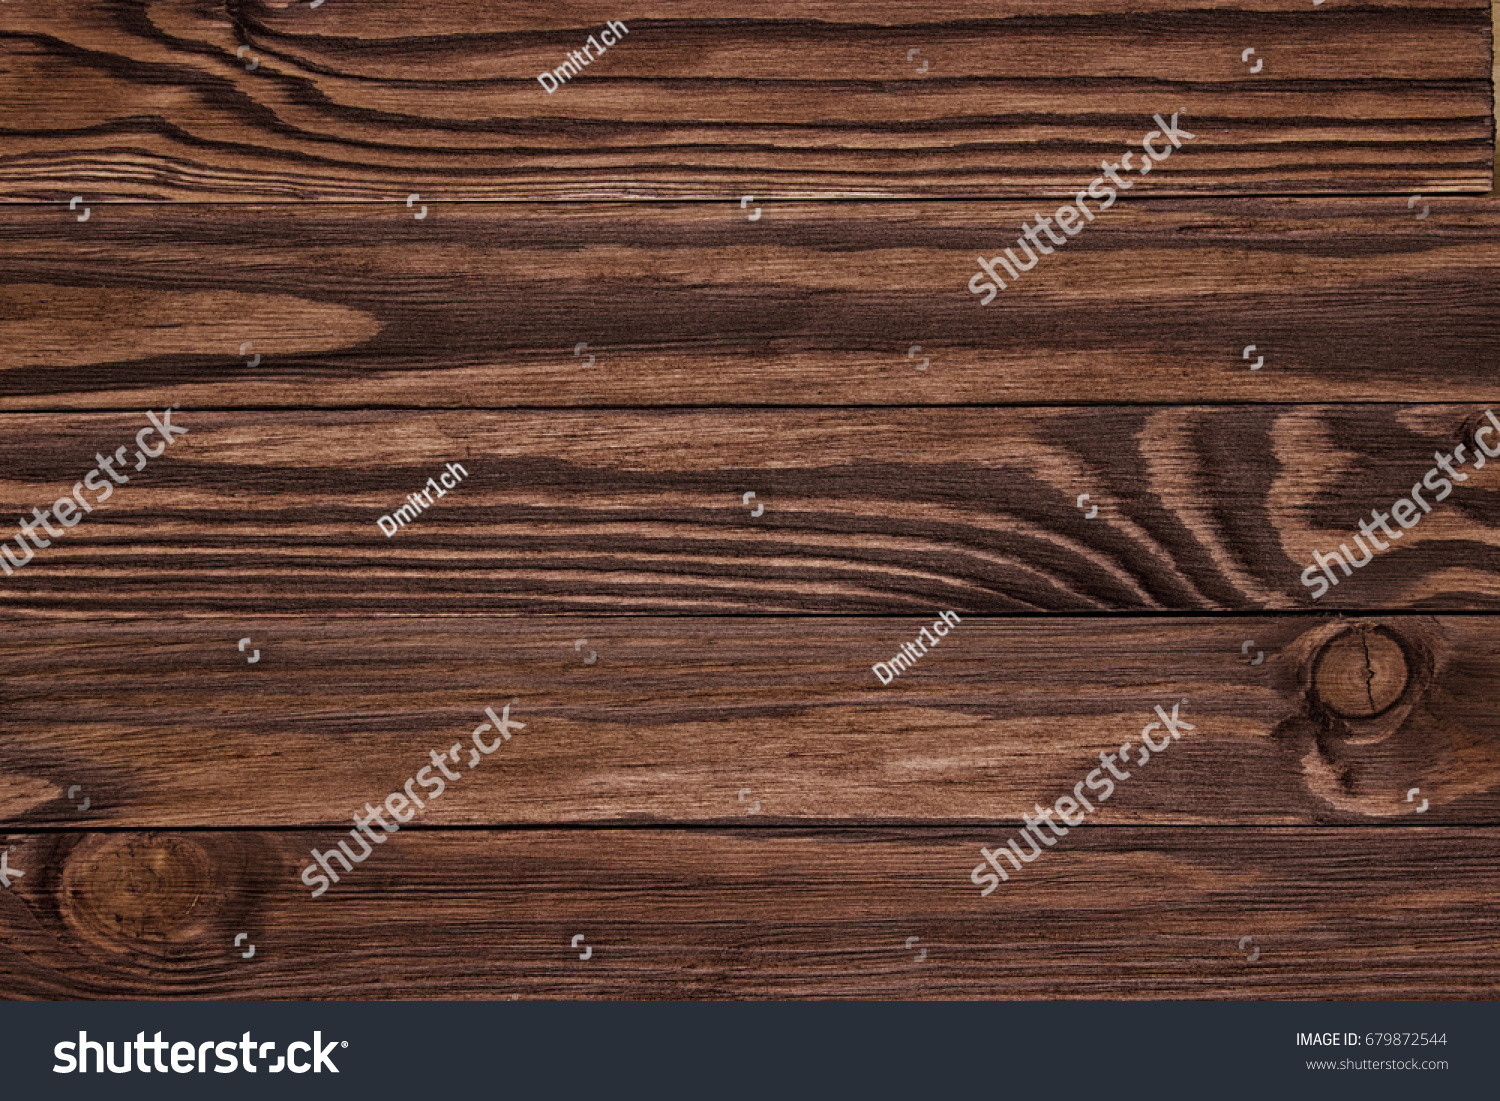 vintage wooden board background Natural material Grunge wood panels  #679872544